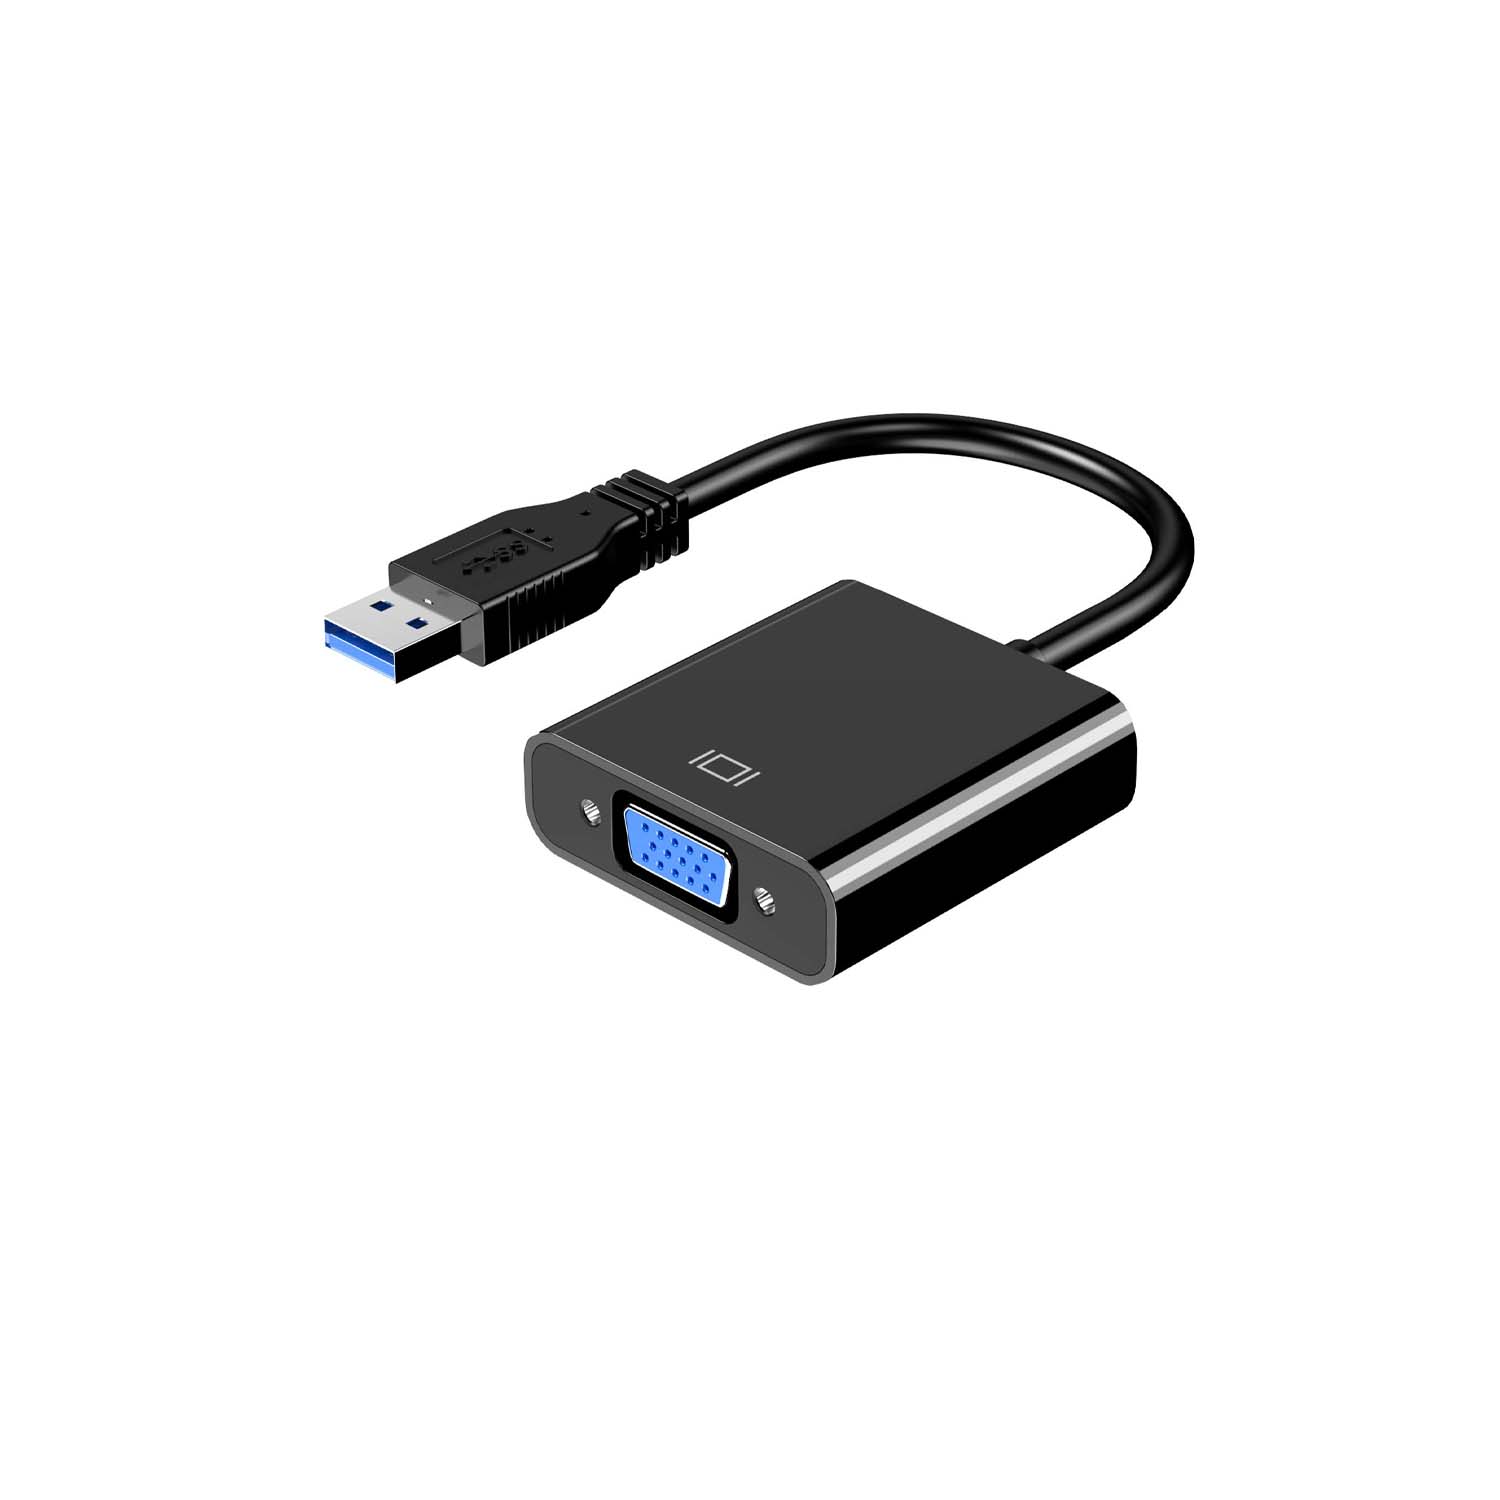 6 inch USB 2.0 A Male to VGA Female Adapter Black